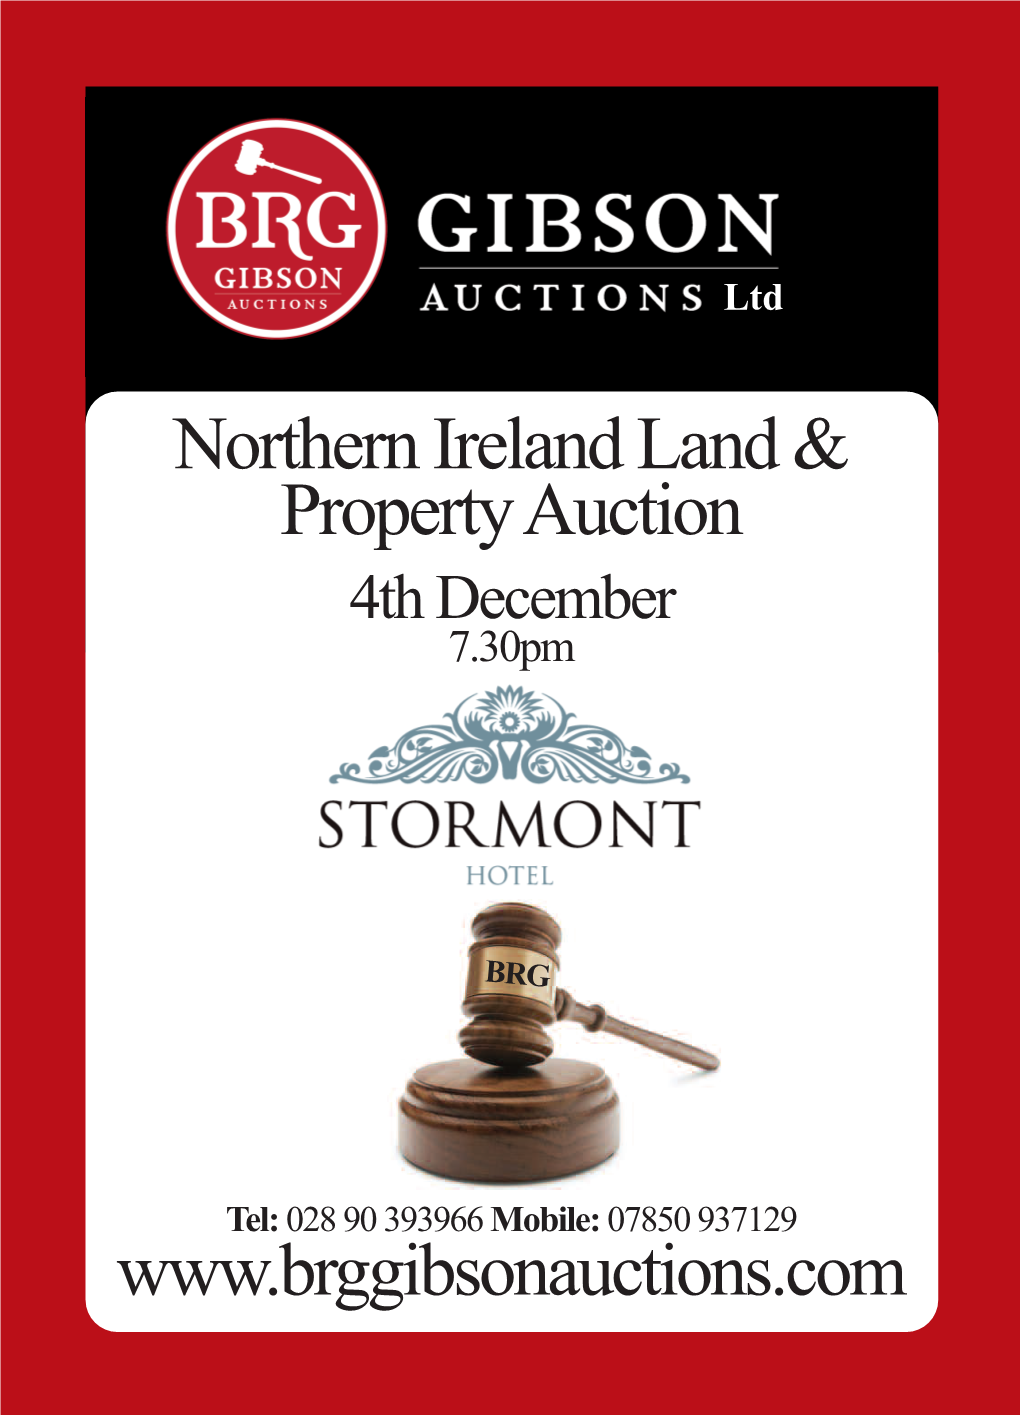 Northern Ireland Land & Property Auction 4Tthhddecemcbeemr 2B0e12r 7.30Pm